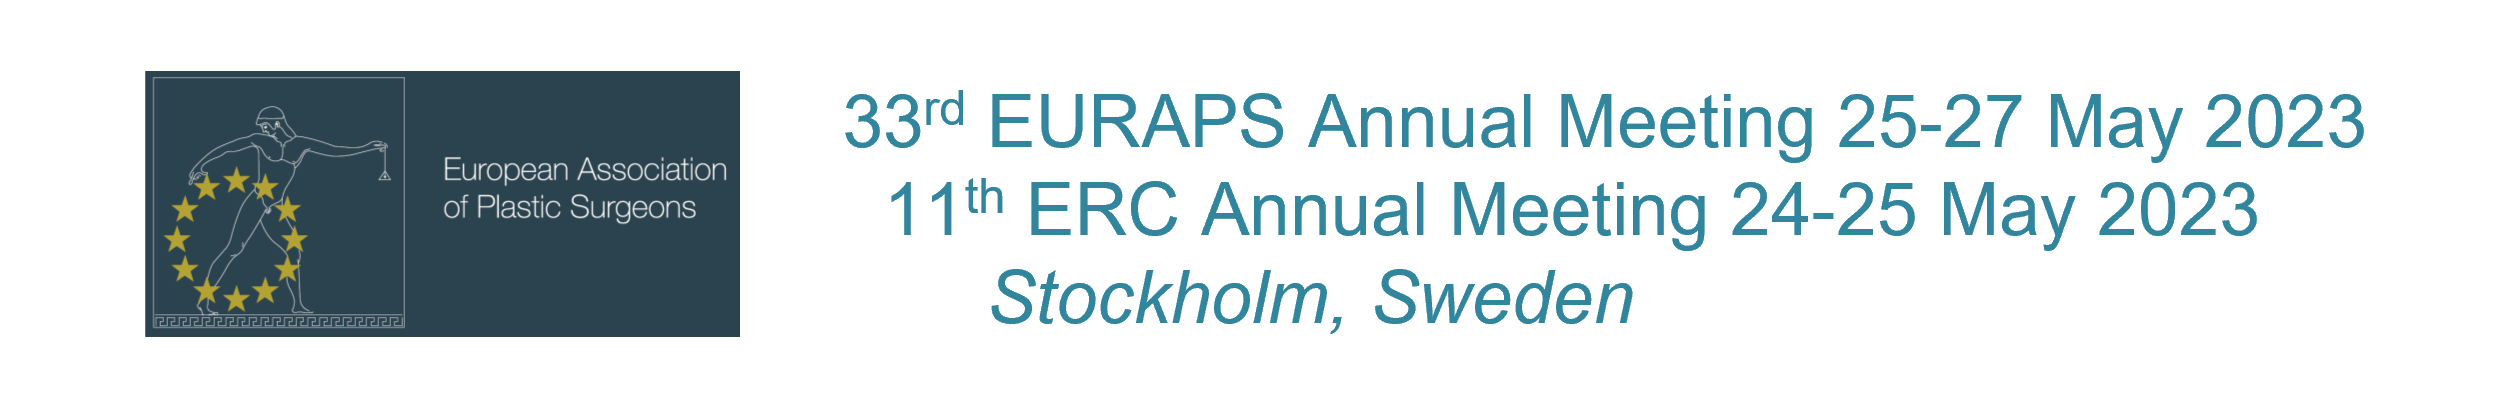 EURAPS & ERC Meeting 2023